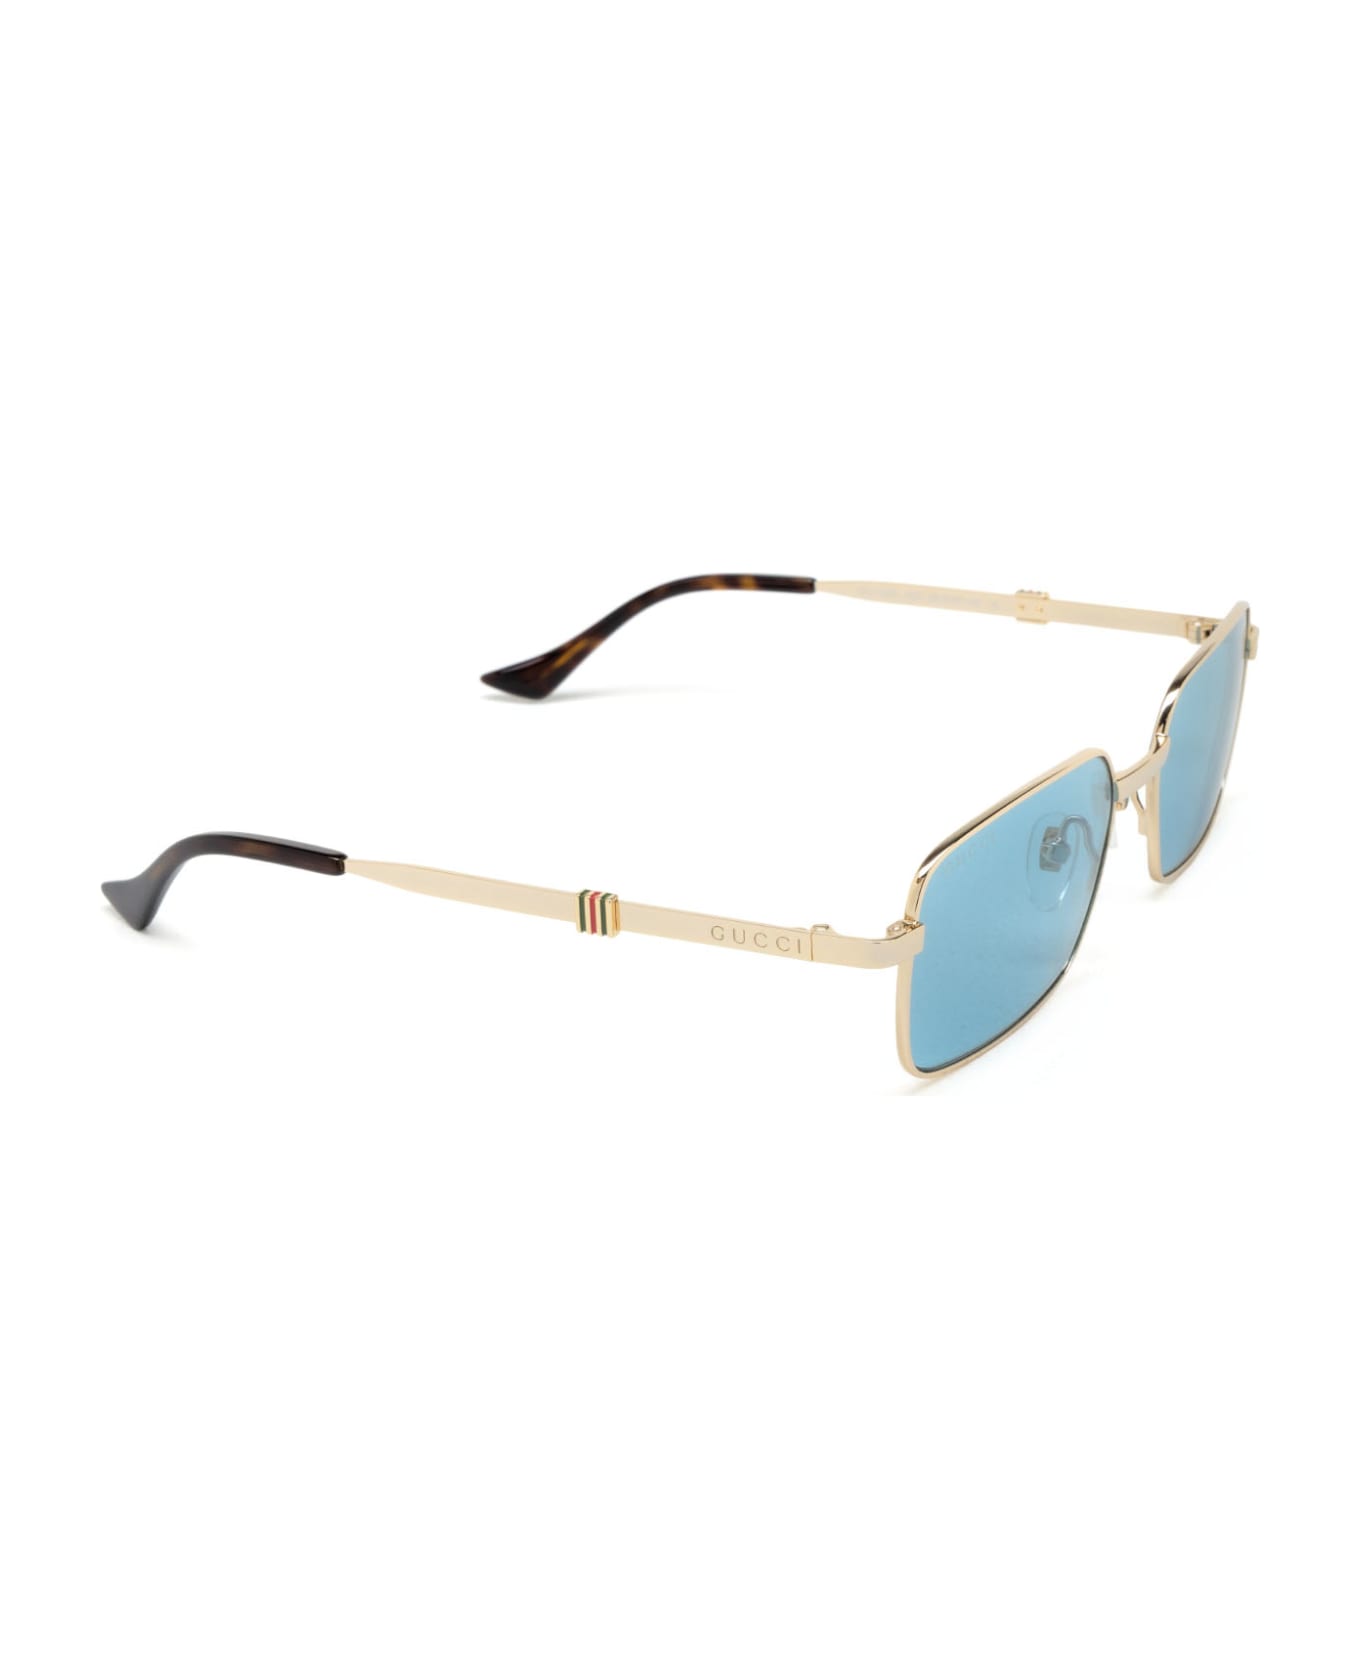 Gucci Eyewear Gg1495s Gold Sunglasses - Gold